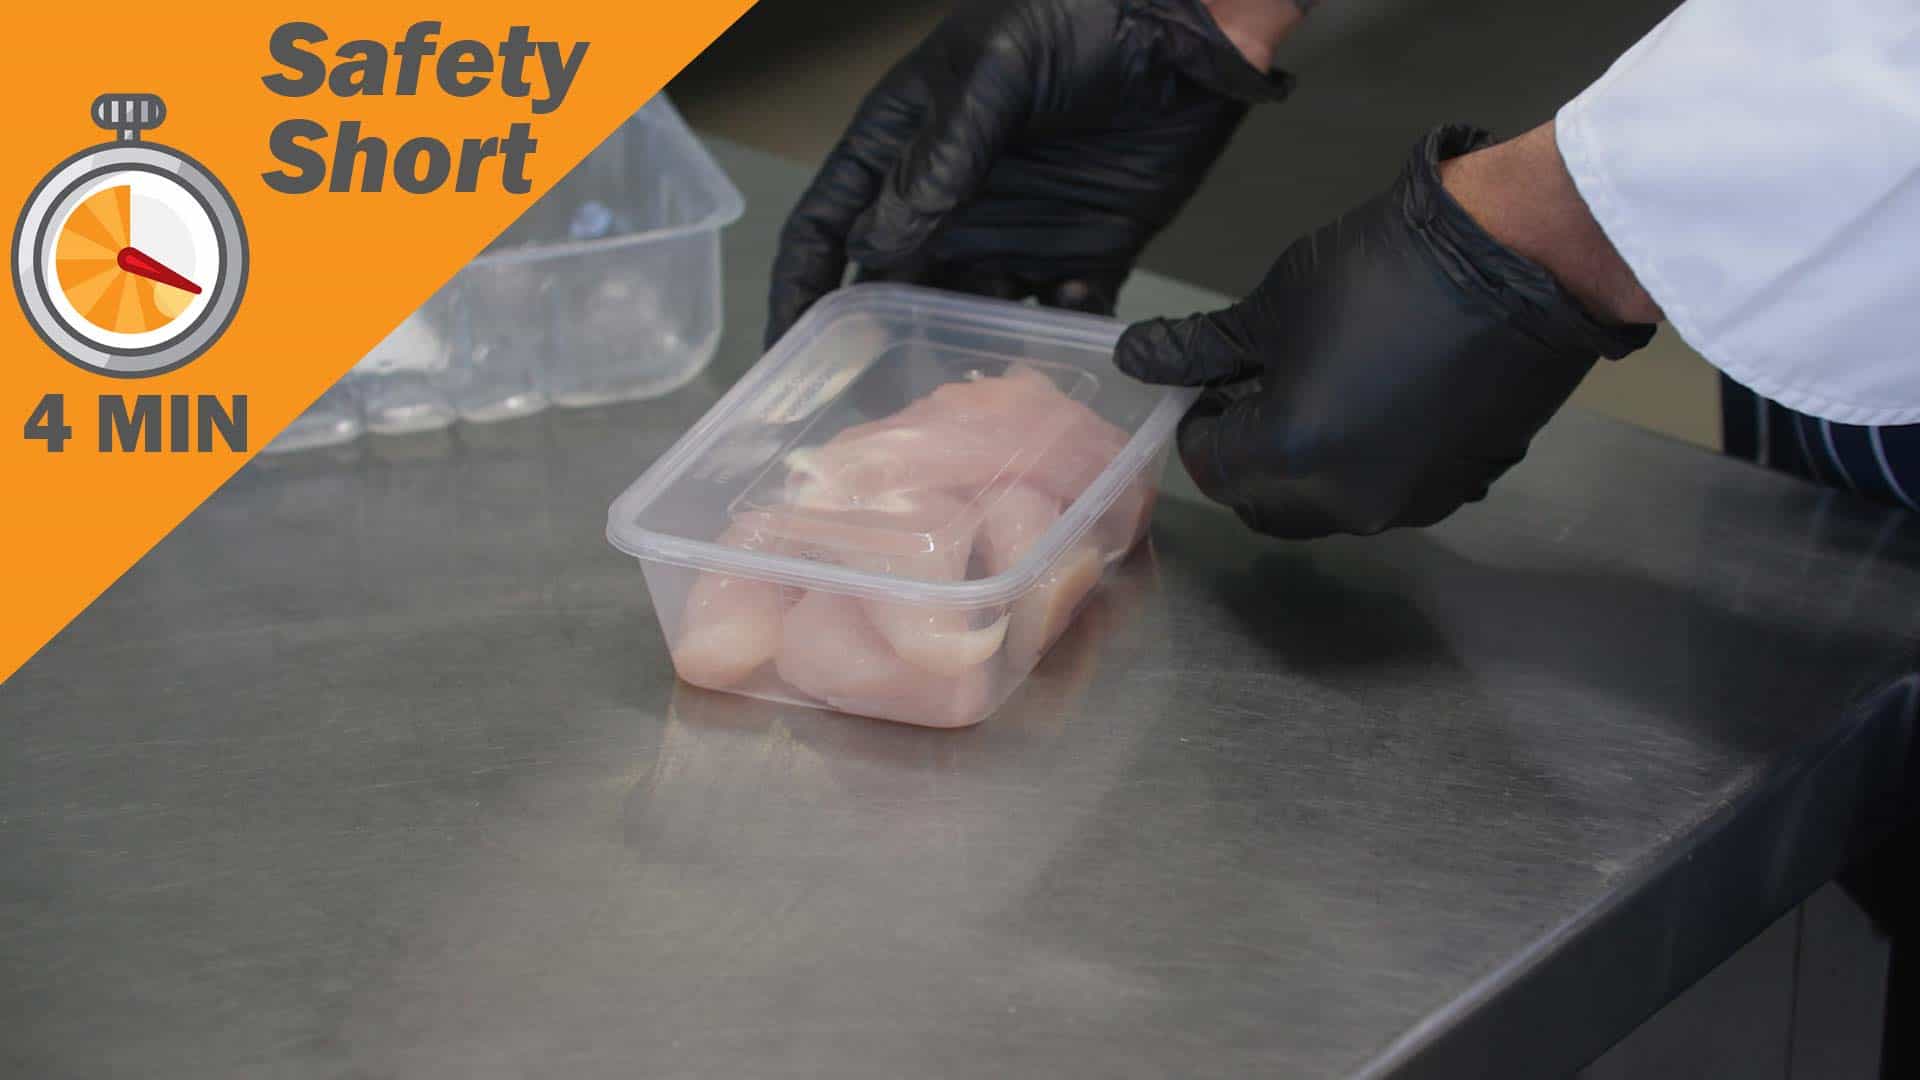 Kitchen Safety and Food Hygiene – Hygiene Solutions Safe Storage [Safety Short]